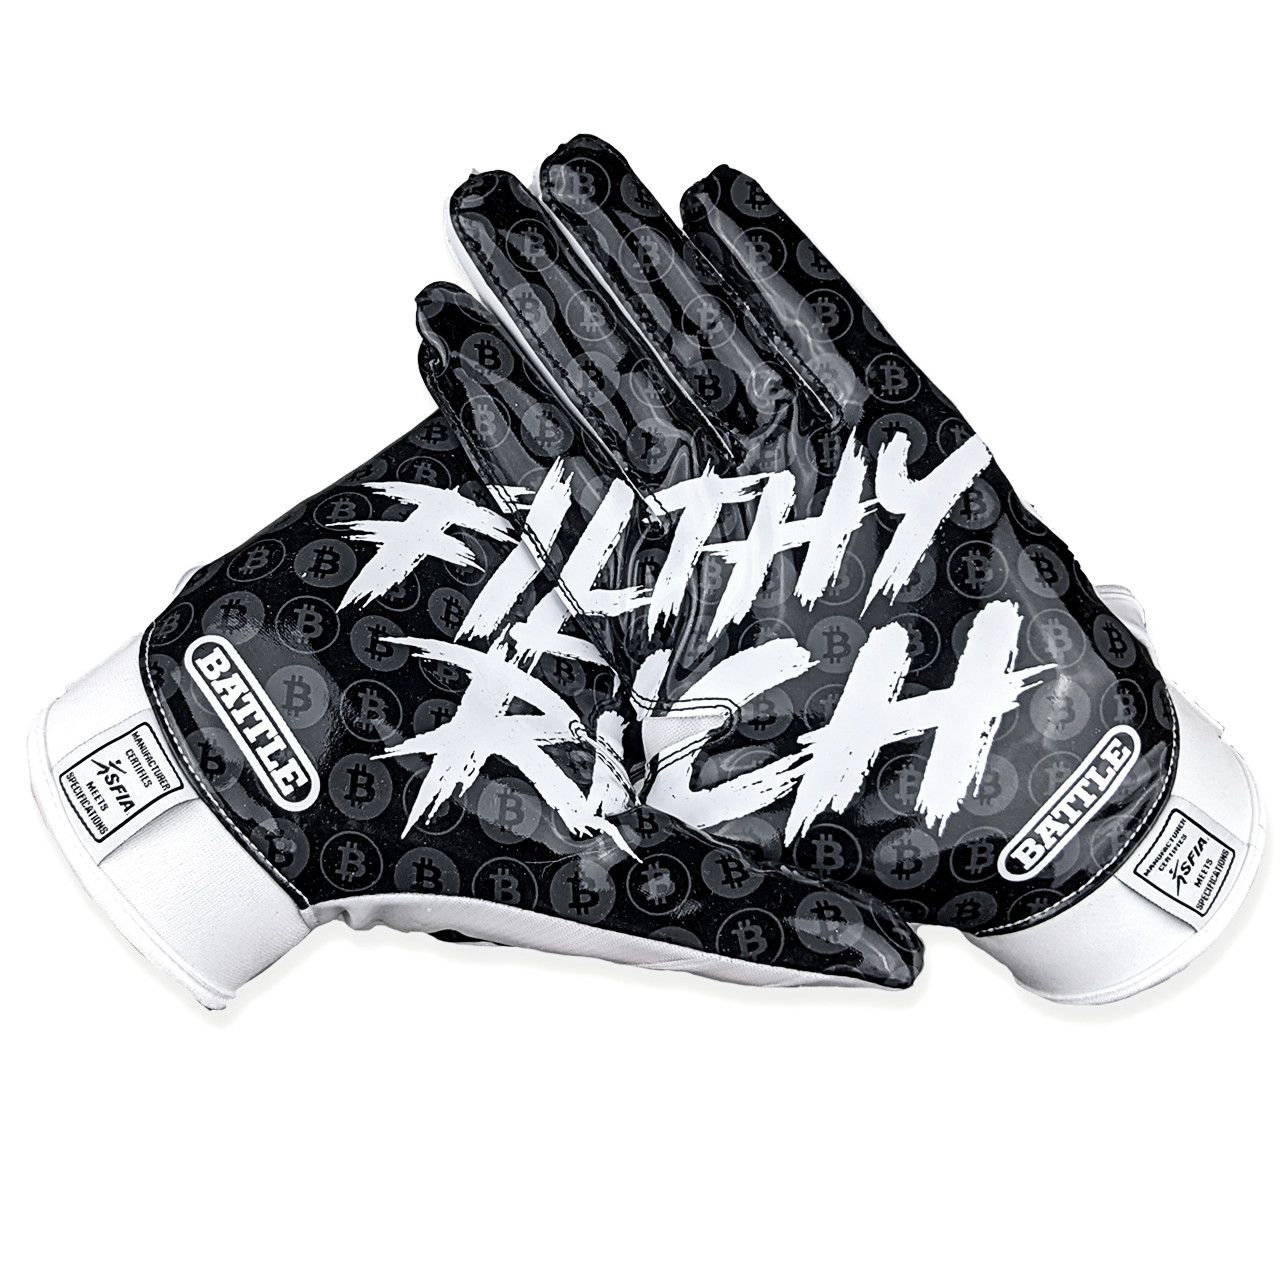 Branded Football Gloves For Sale